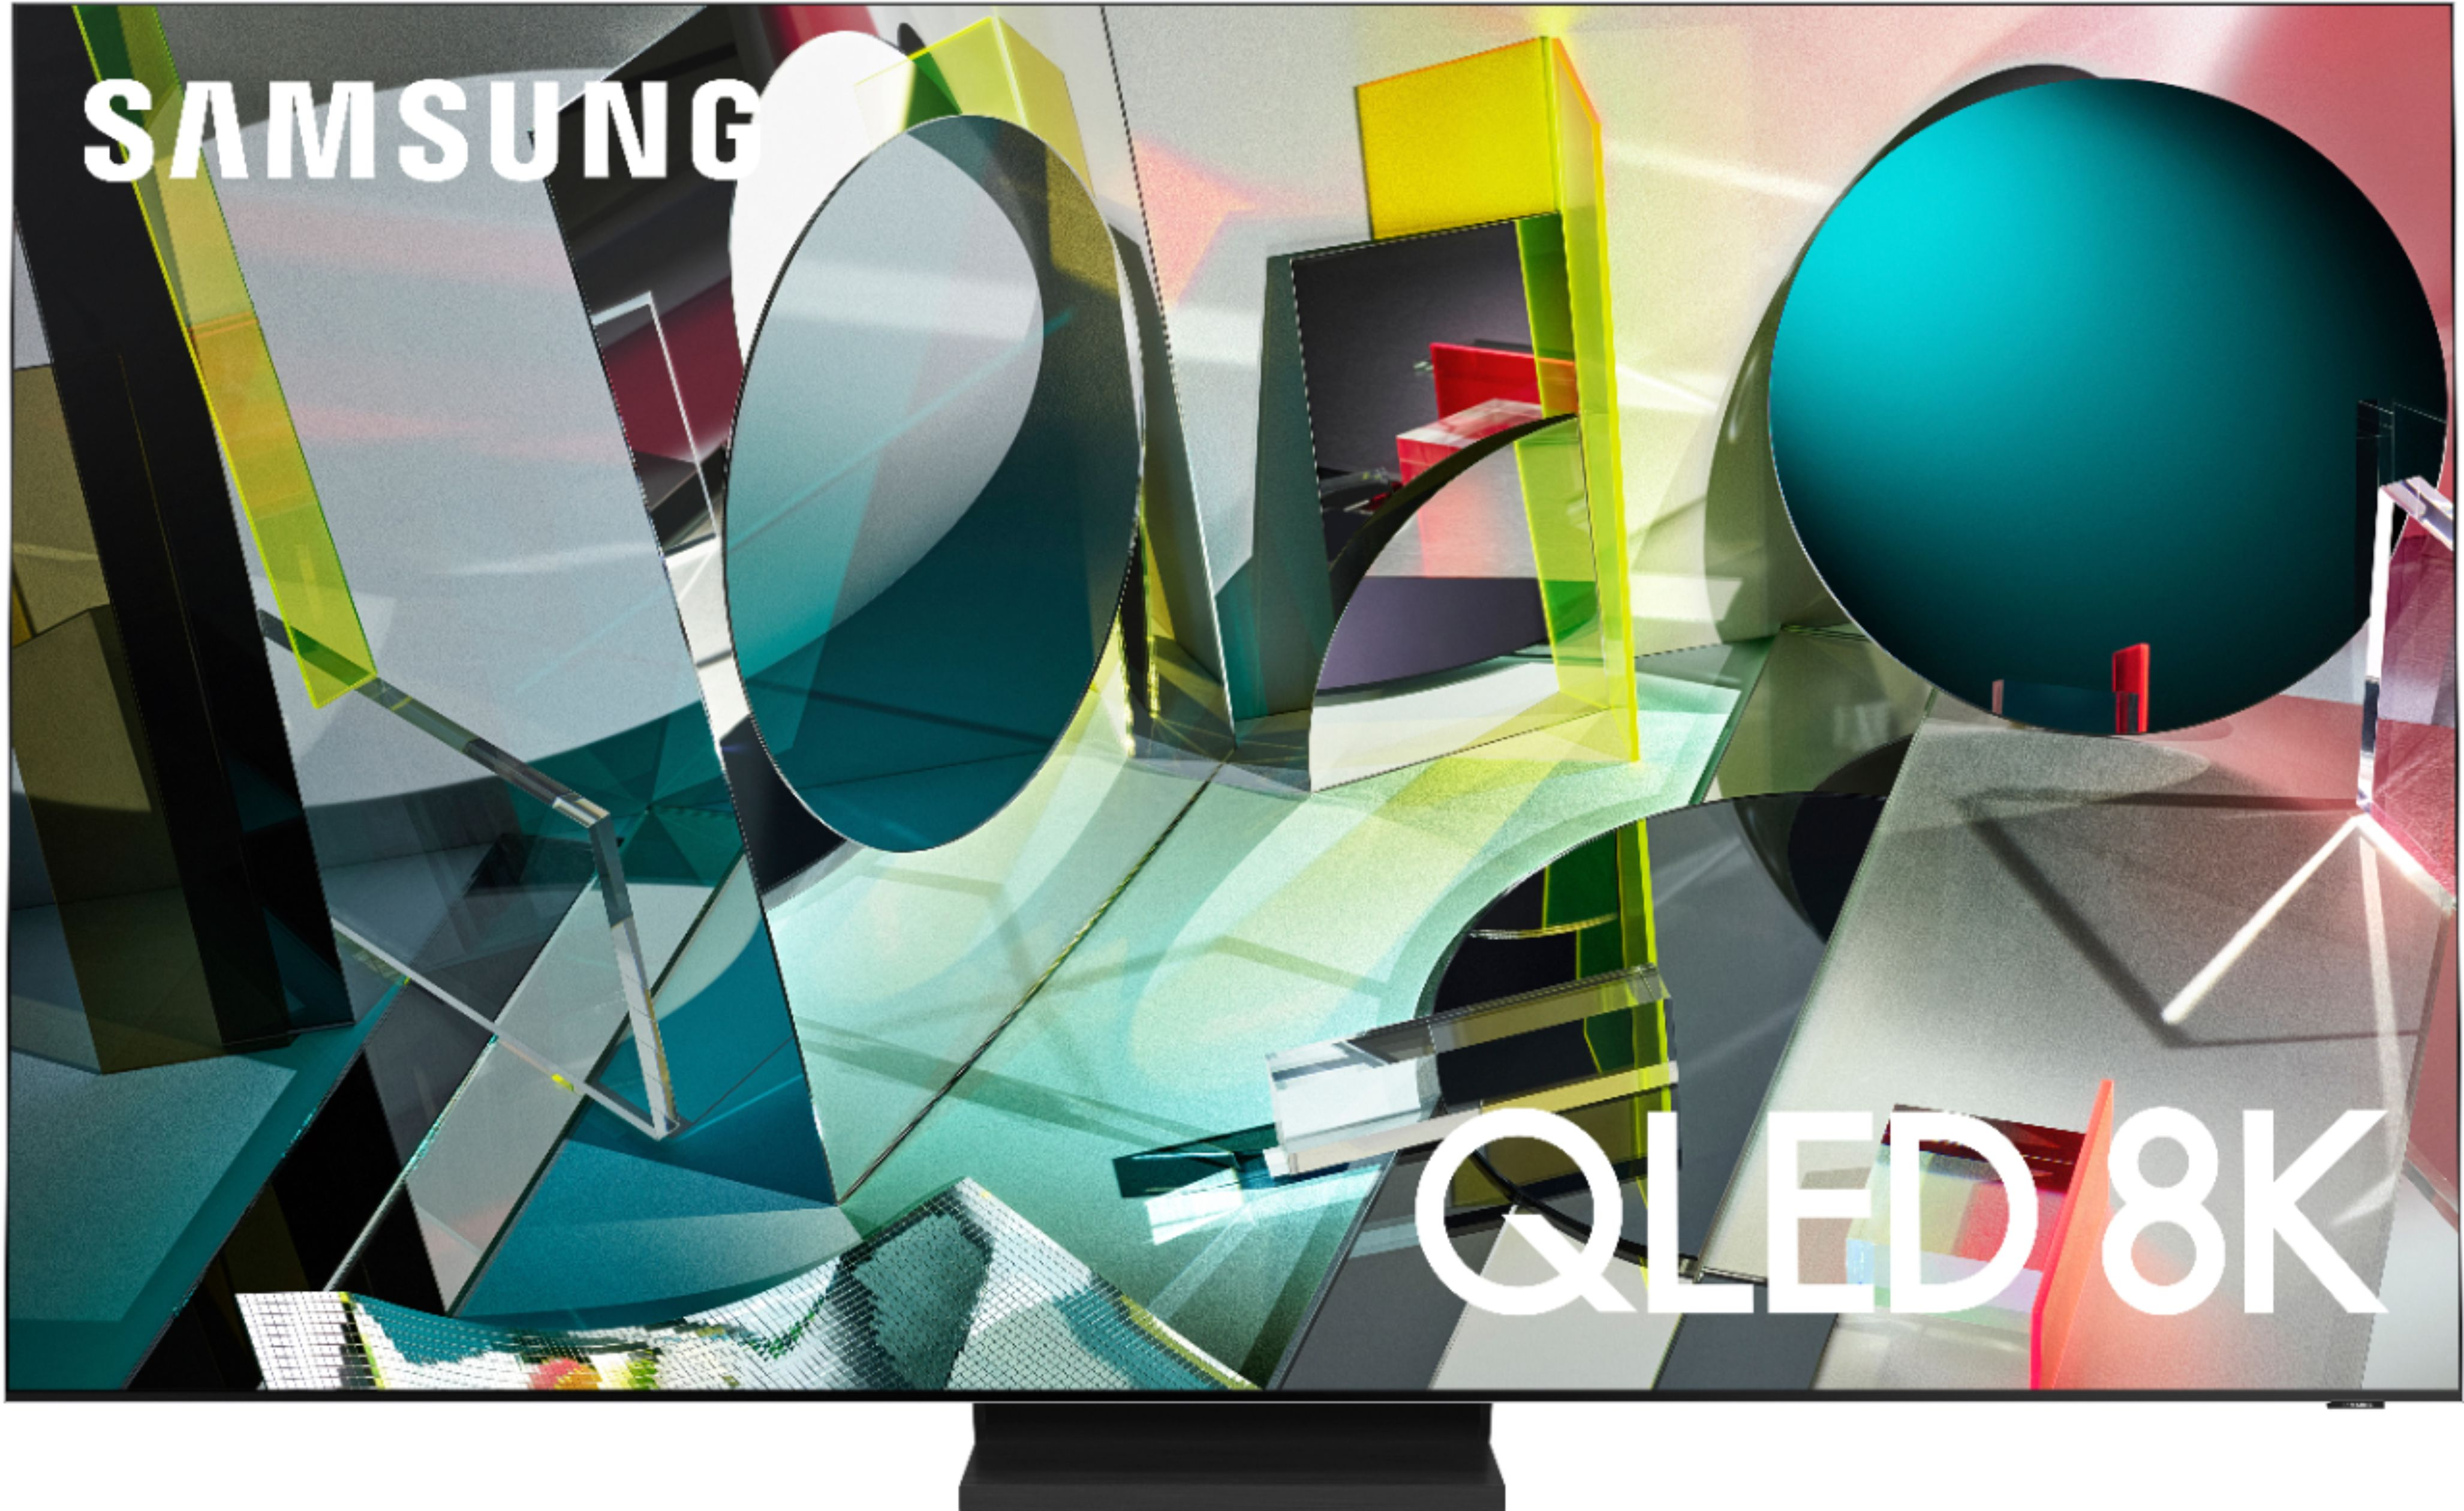 Samsung 65" Class Q900TS Series QLED 8K UHD Smart Tizen TV QN65Q900TSFXZA - Best Buy $2699.99